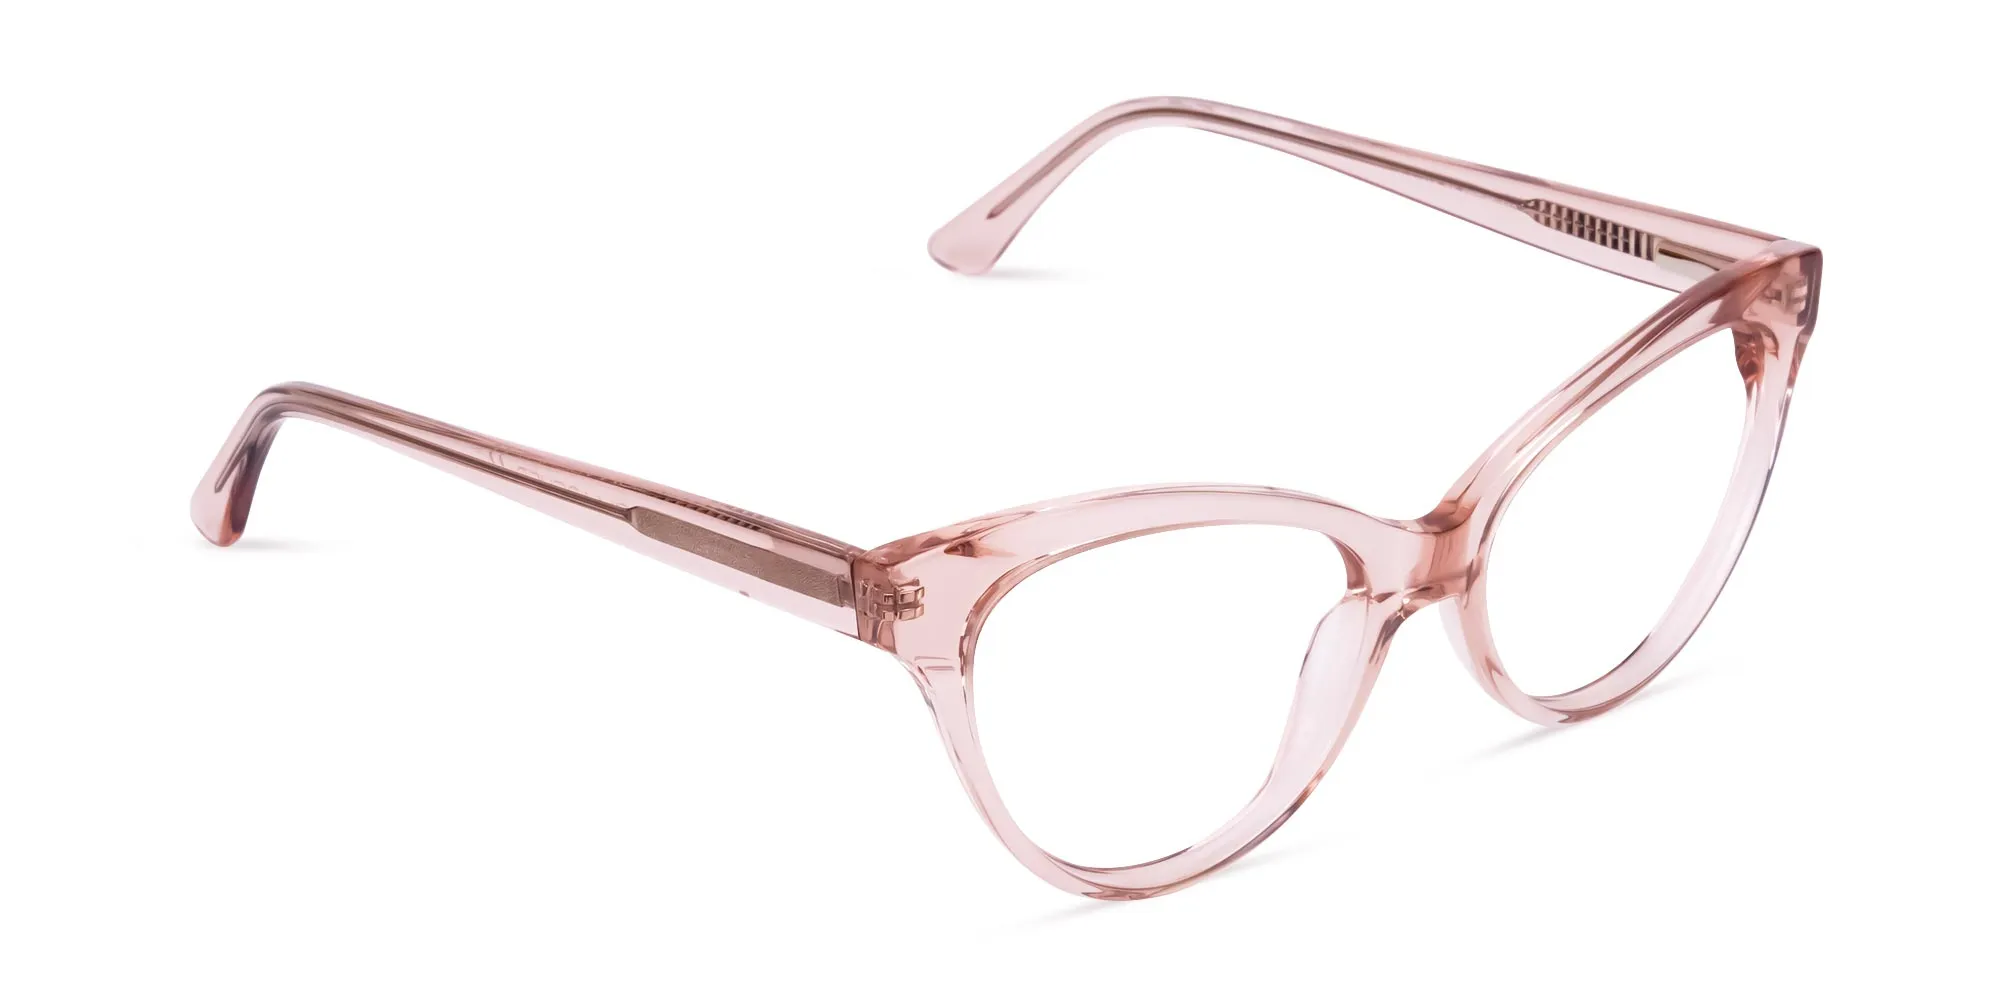 WORSLEY 3 - Cream Brown Translucent Cateye Glasses | Specscart.®